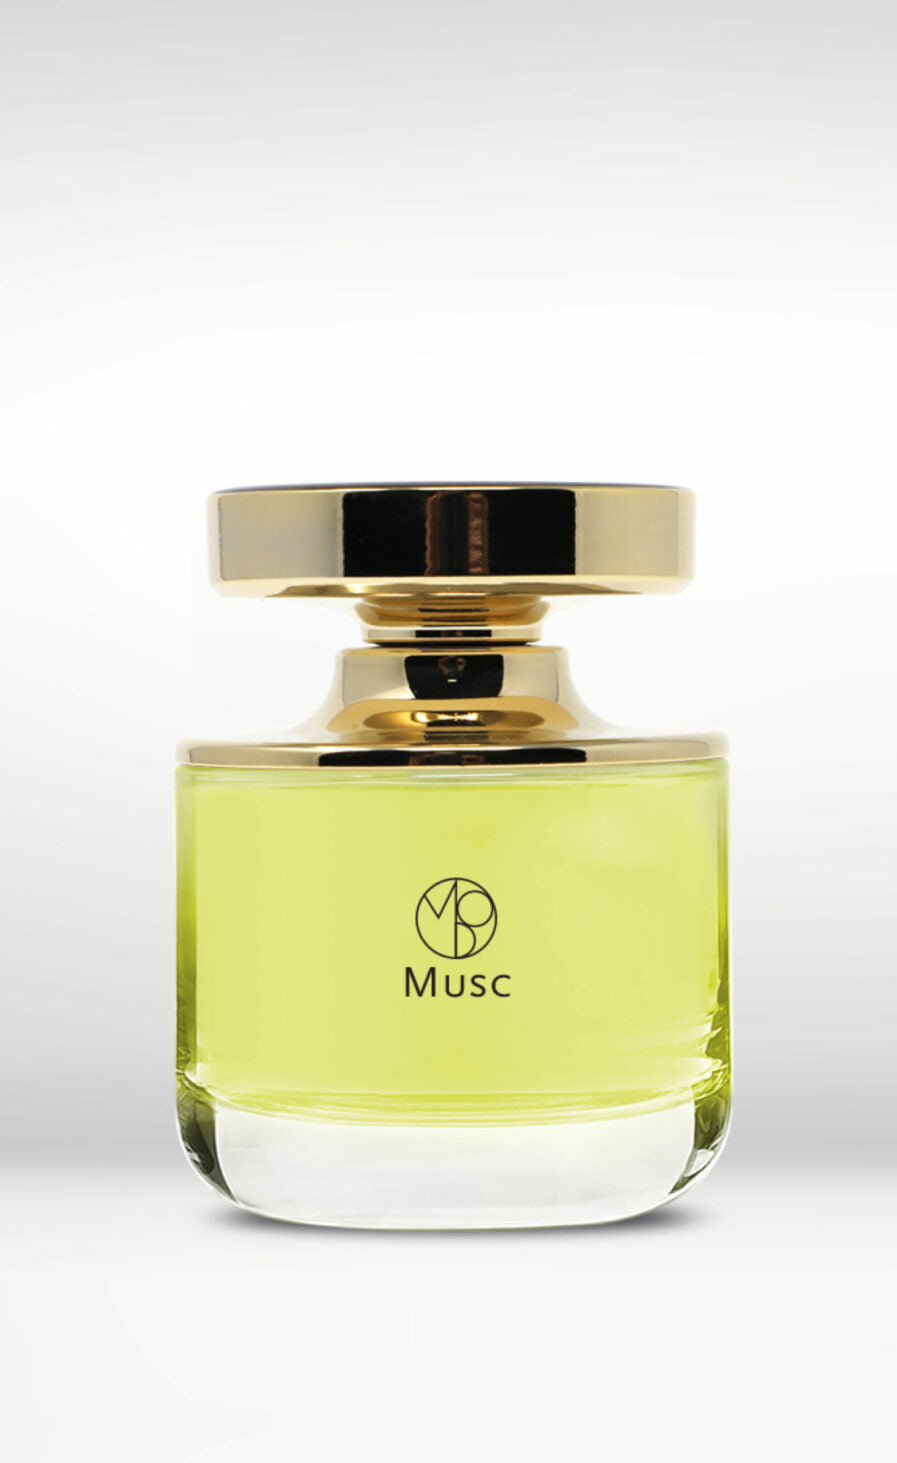 Mona di Orio Musc - Eau De Parfum 75ml